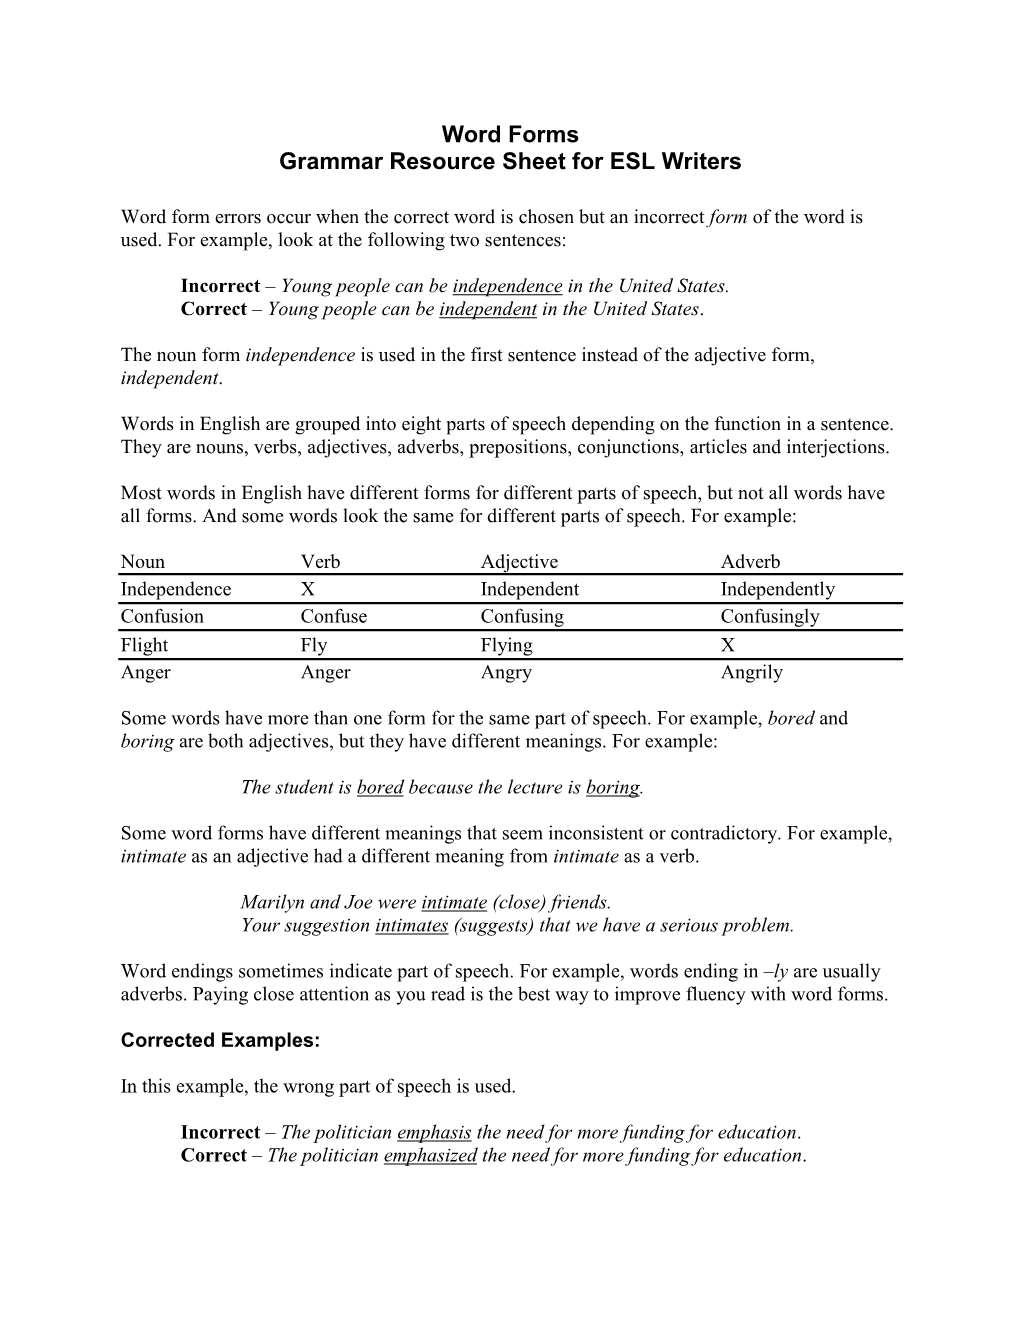 word-forms-grammar-resource-sheet-for-esl-writers-docslib